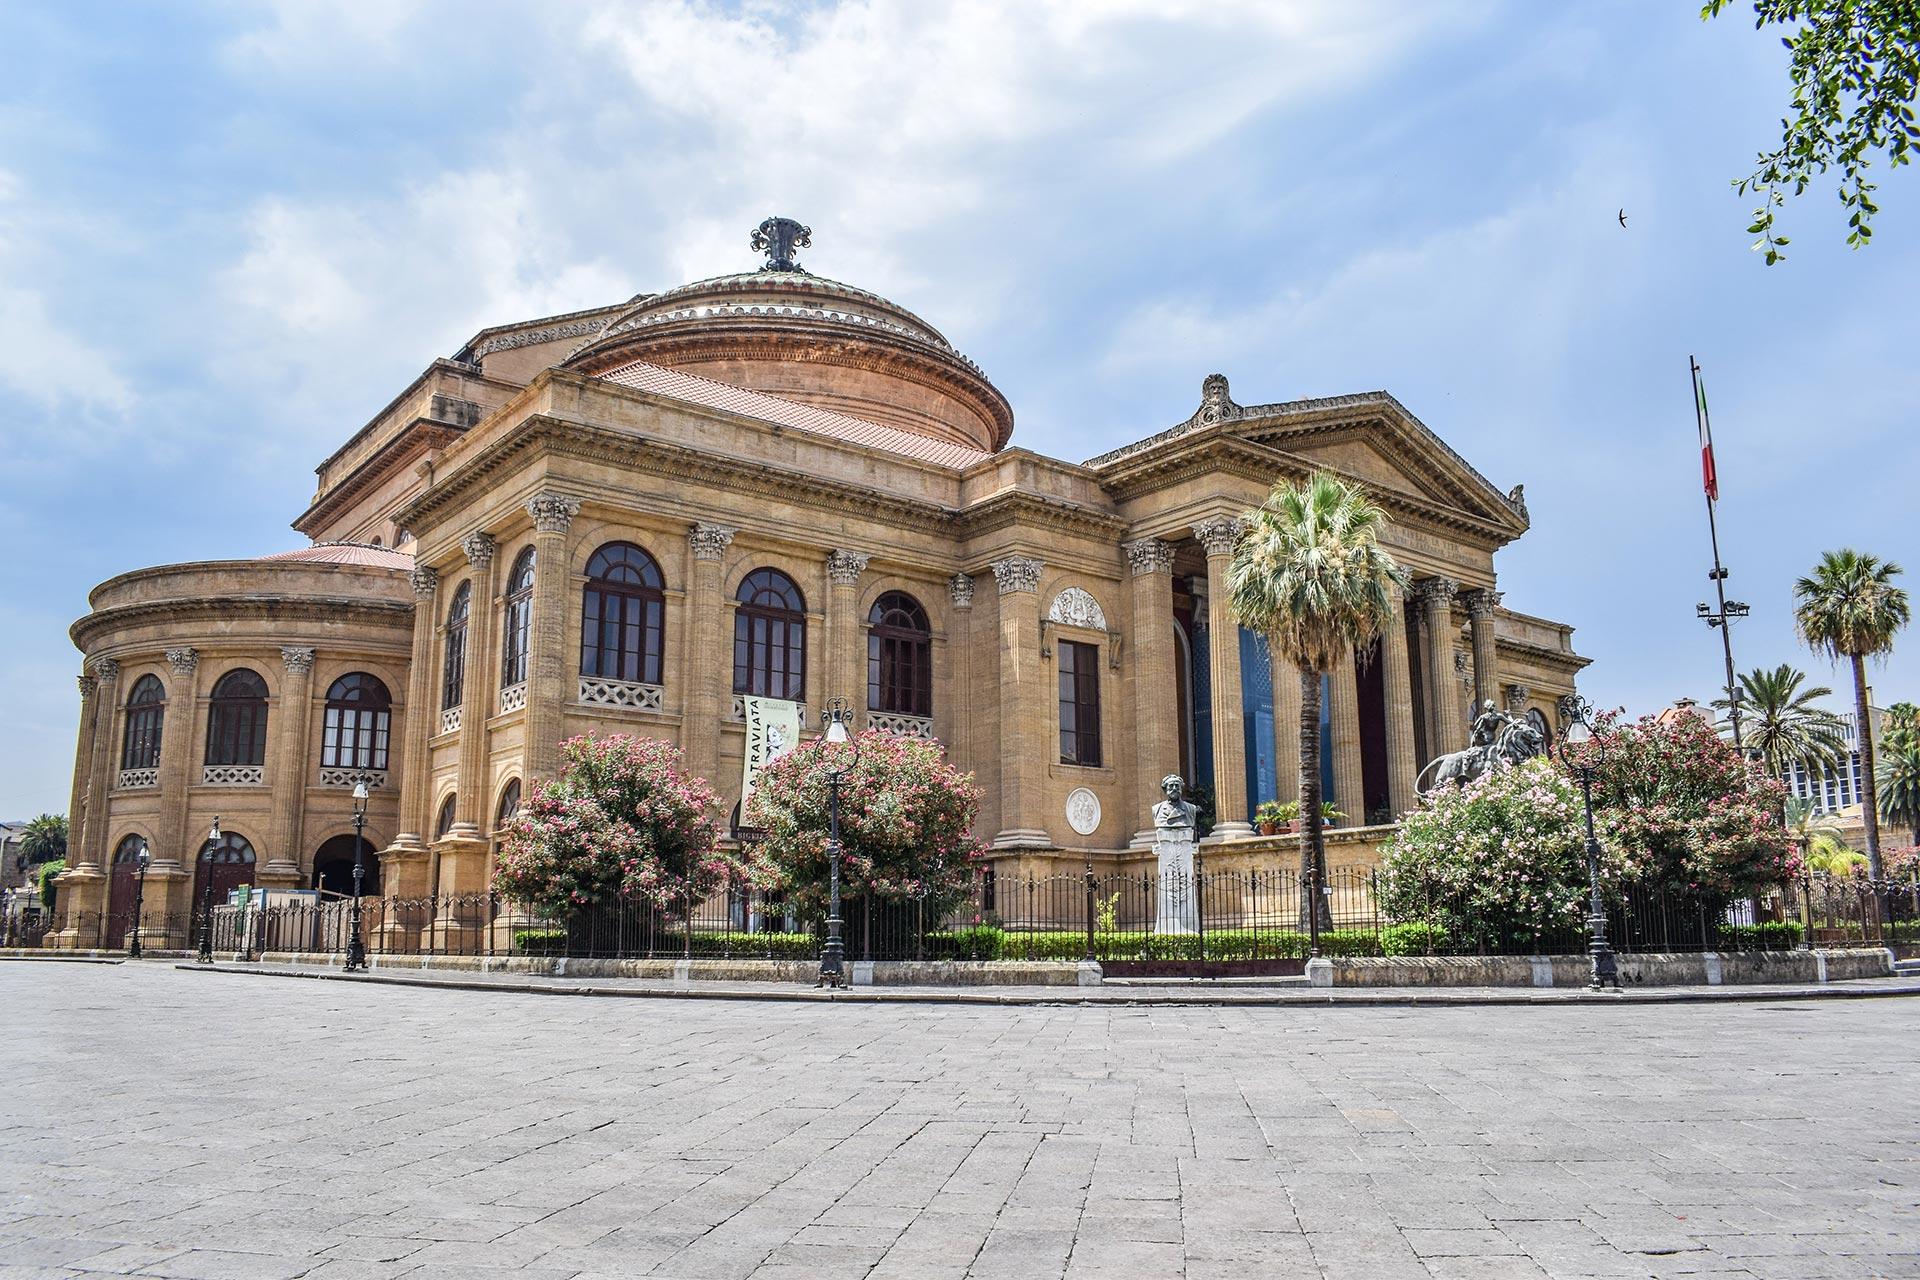 City of Palermo